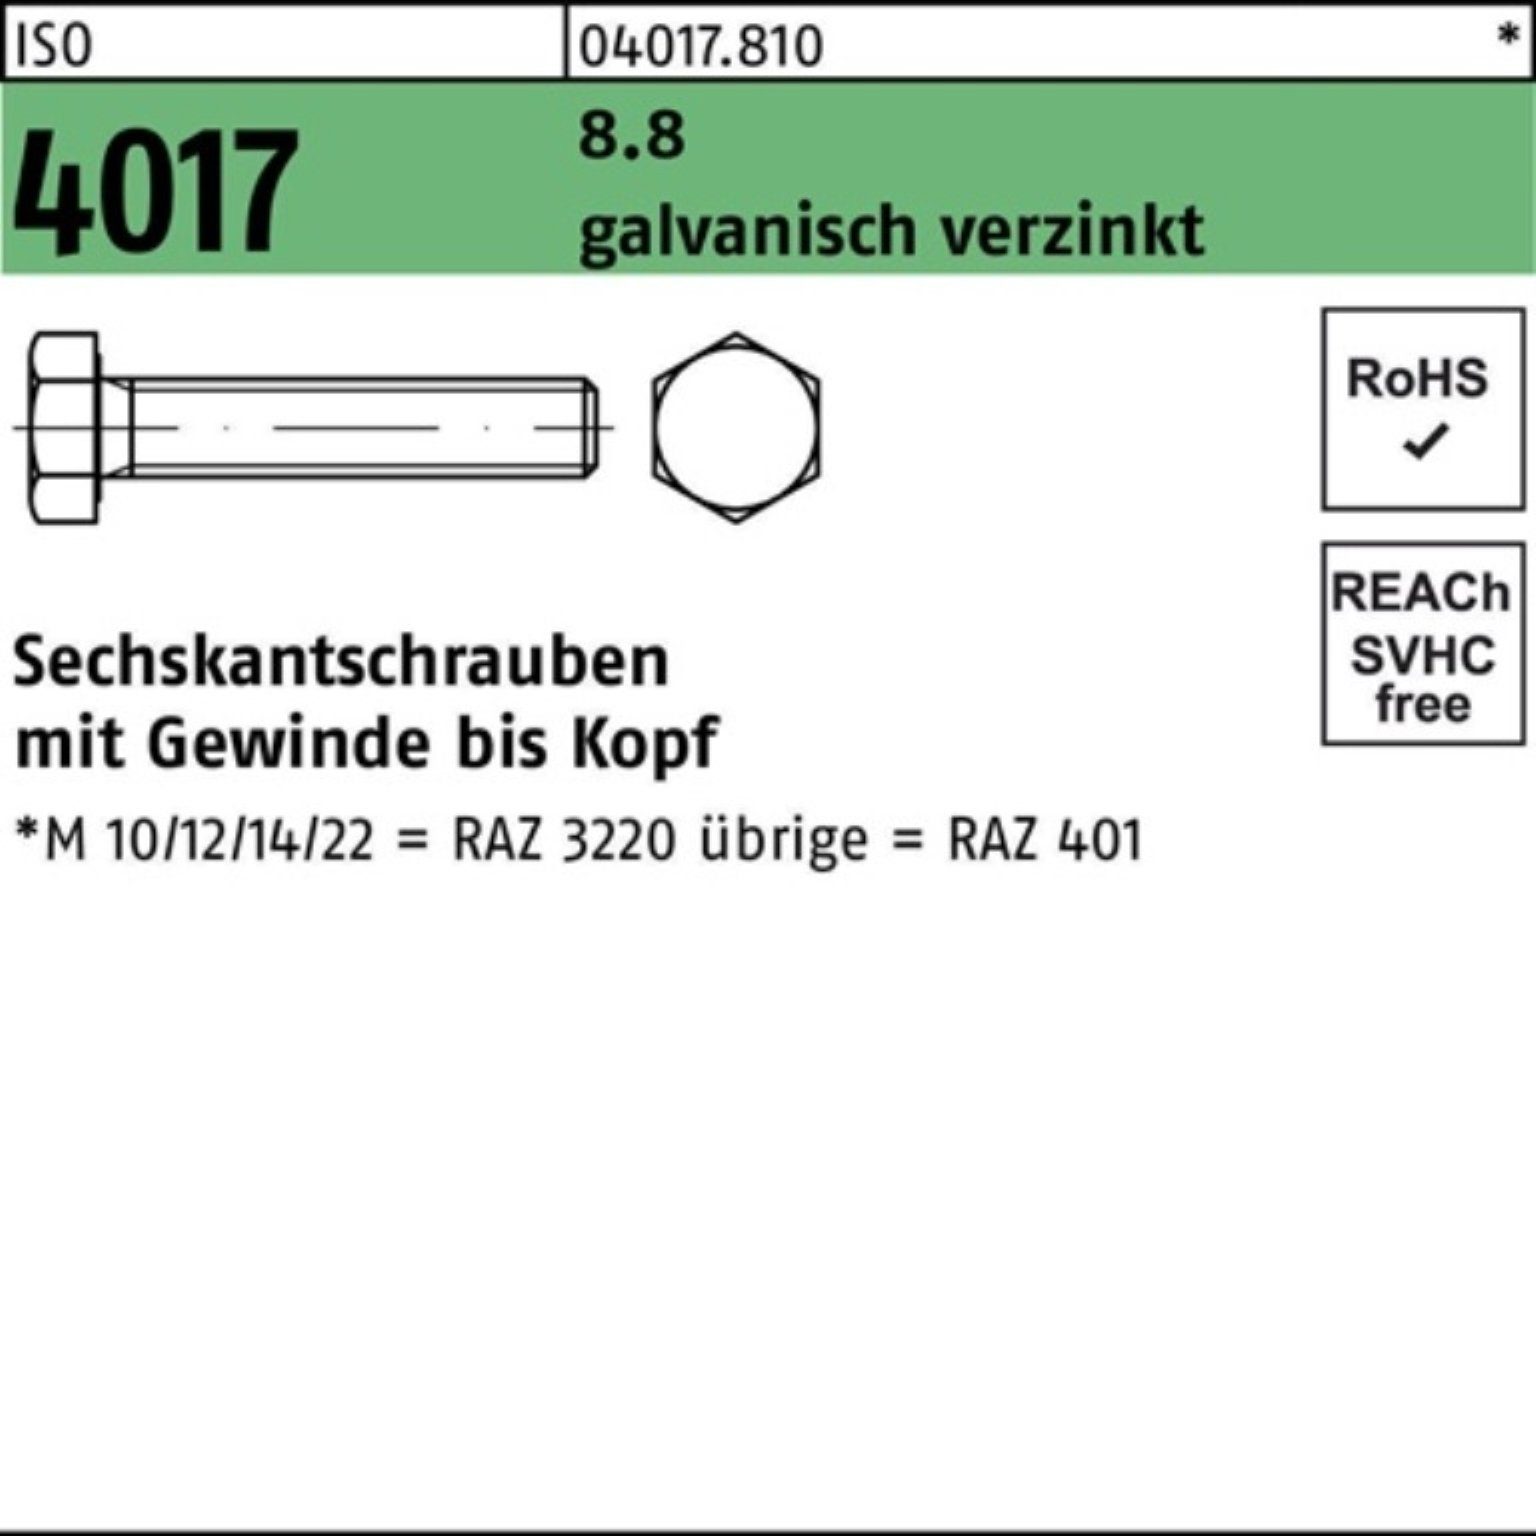 Bufab Sechskantschraube 100er Pack Sechskantschraube ISO 4017 VG M36x 100 8.8 galv.verz. 1 St